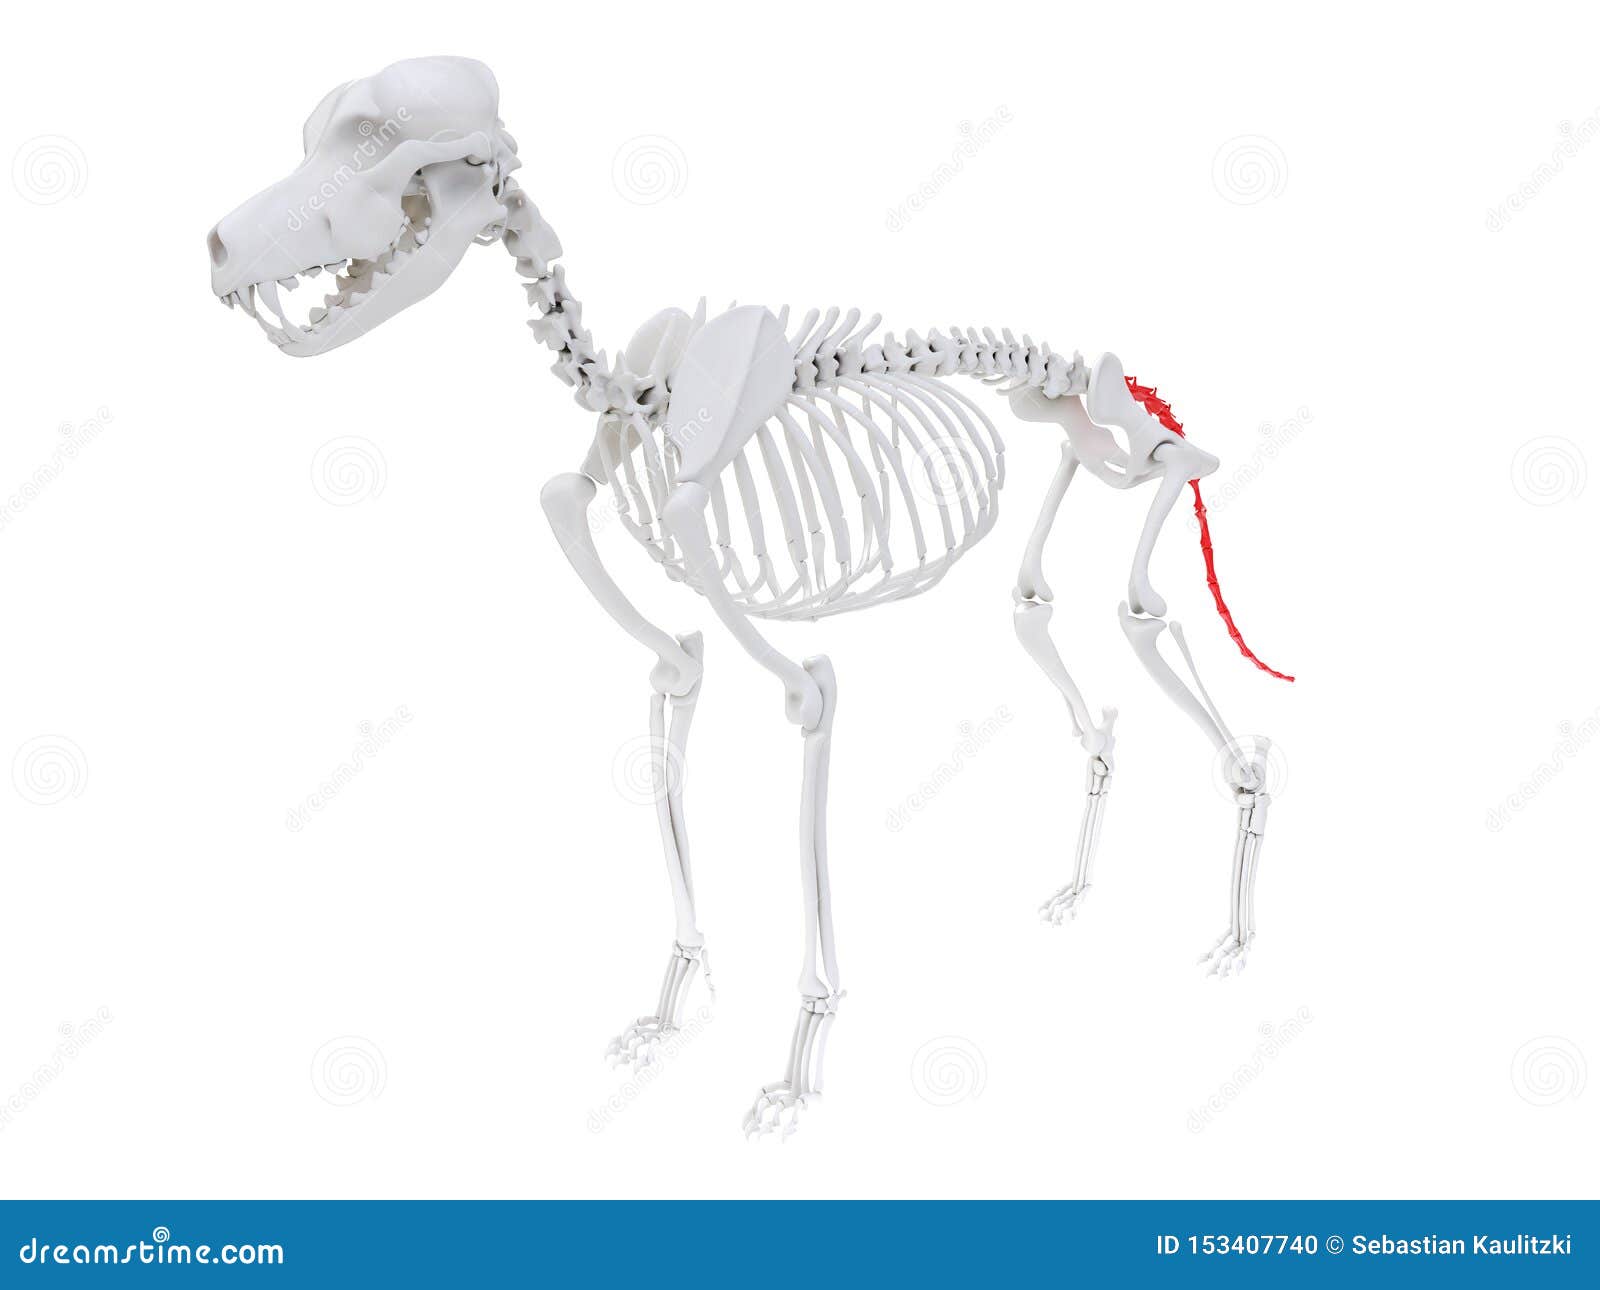 skeletal anatomy - caudal vertebrae